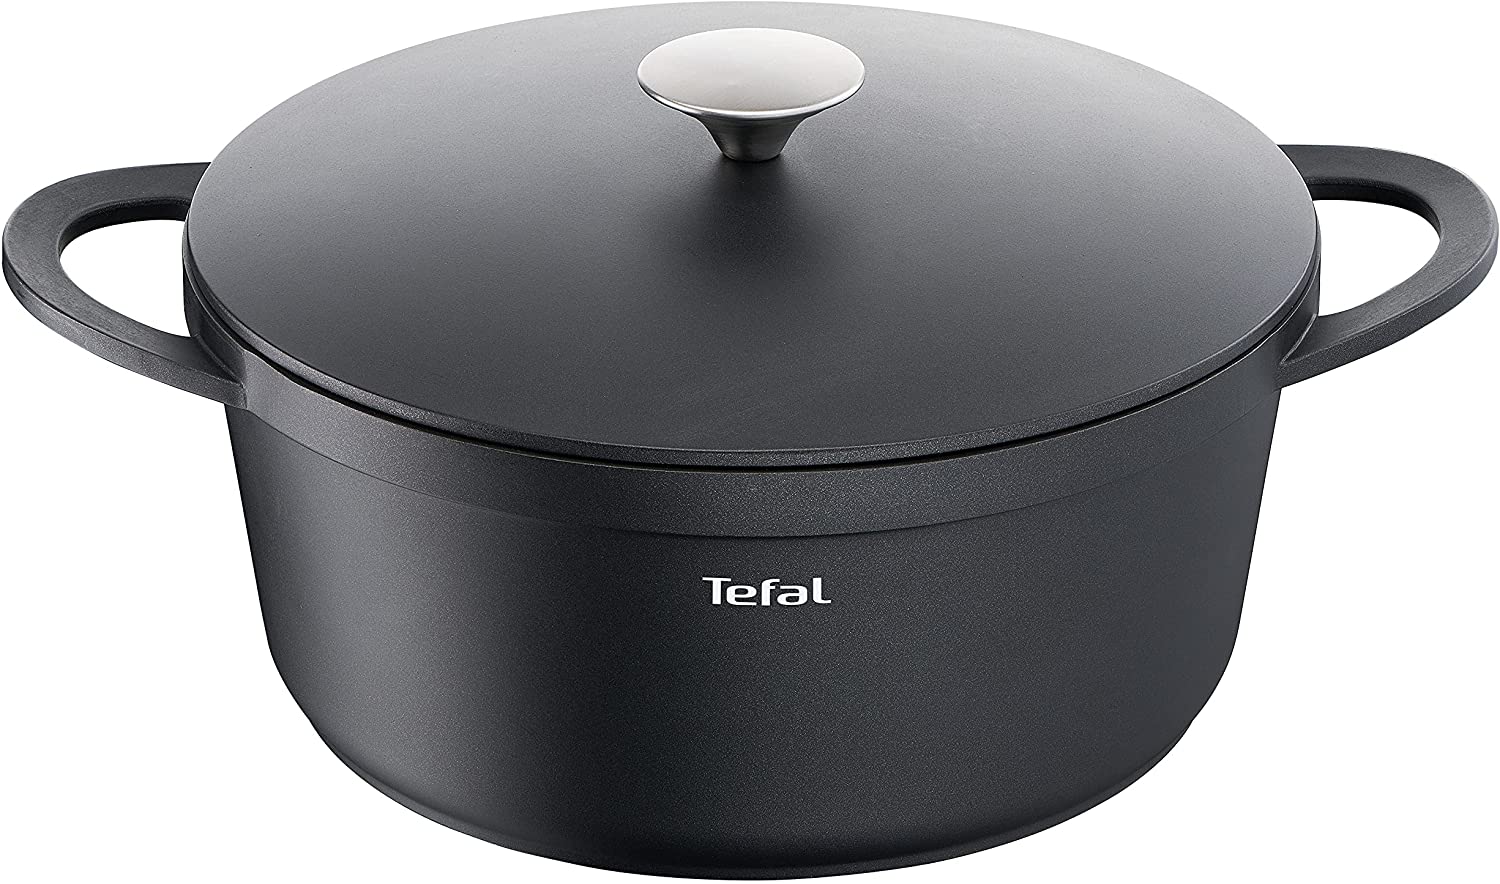 Tefal Trattoria Non-Stick Serving Pan with Cast Lid, Black, Black , 28cm